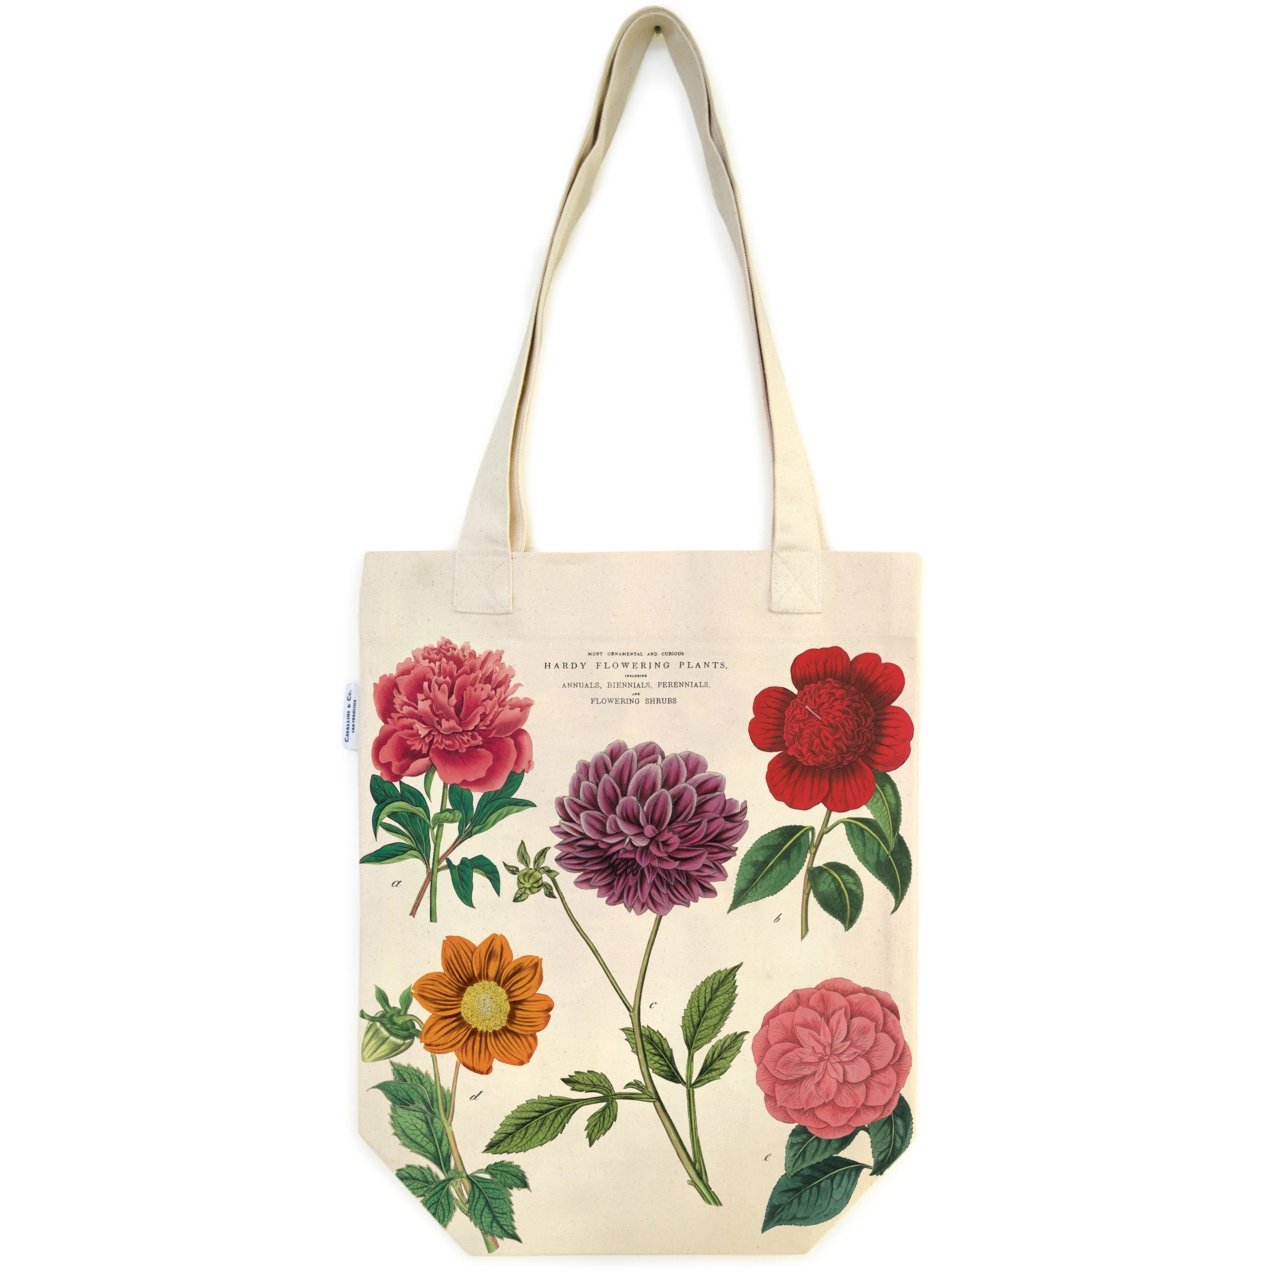 Cavallini Vintage Inspired Tote Bag - Botanica - merriartist.com